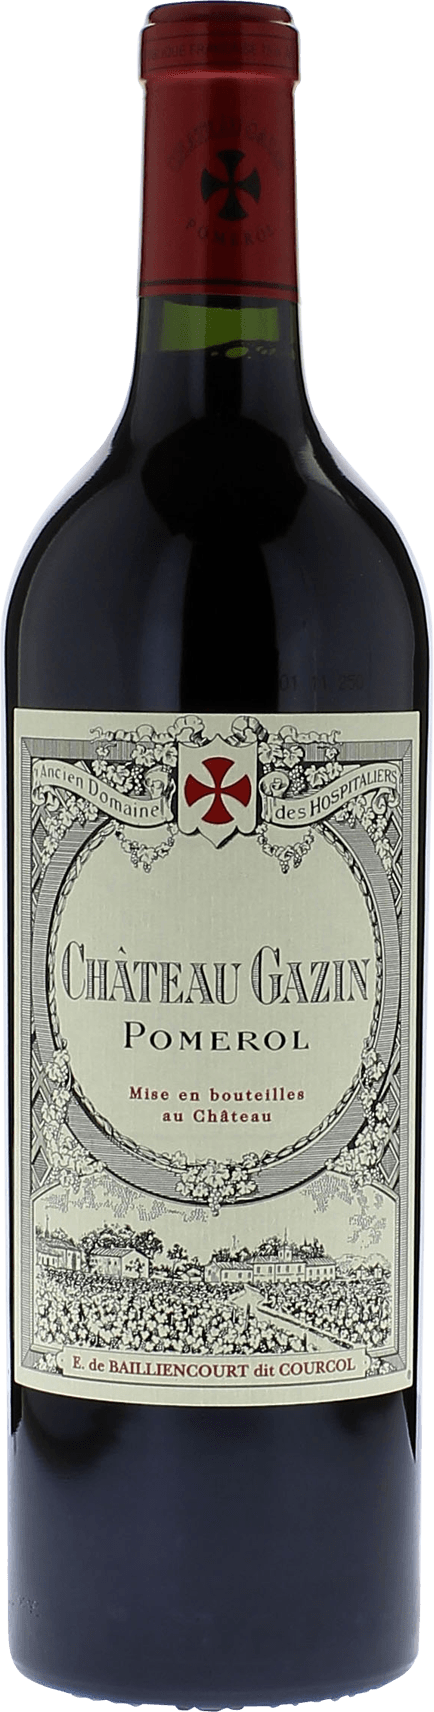 Gazin 1998  Pomerol, Bordeaux rouge